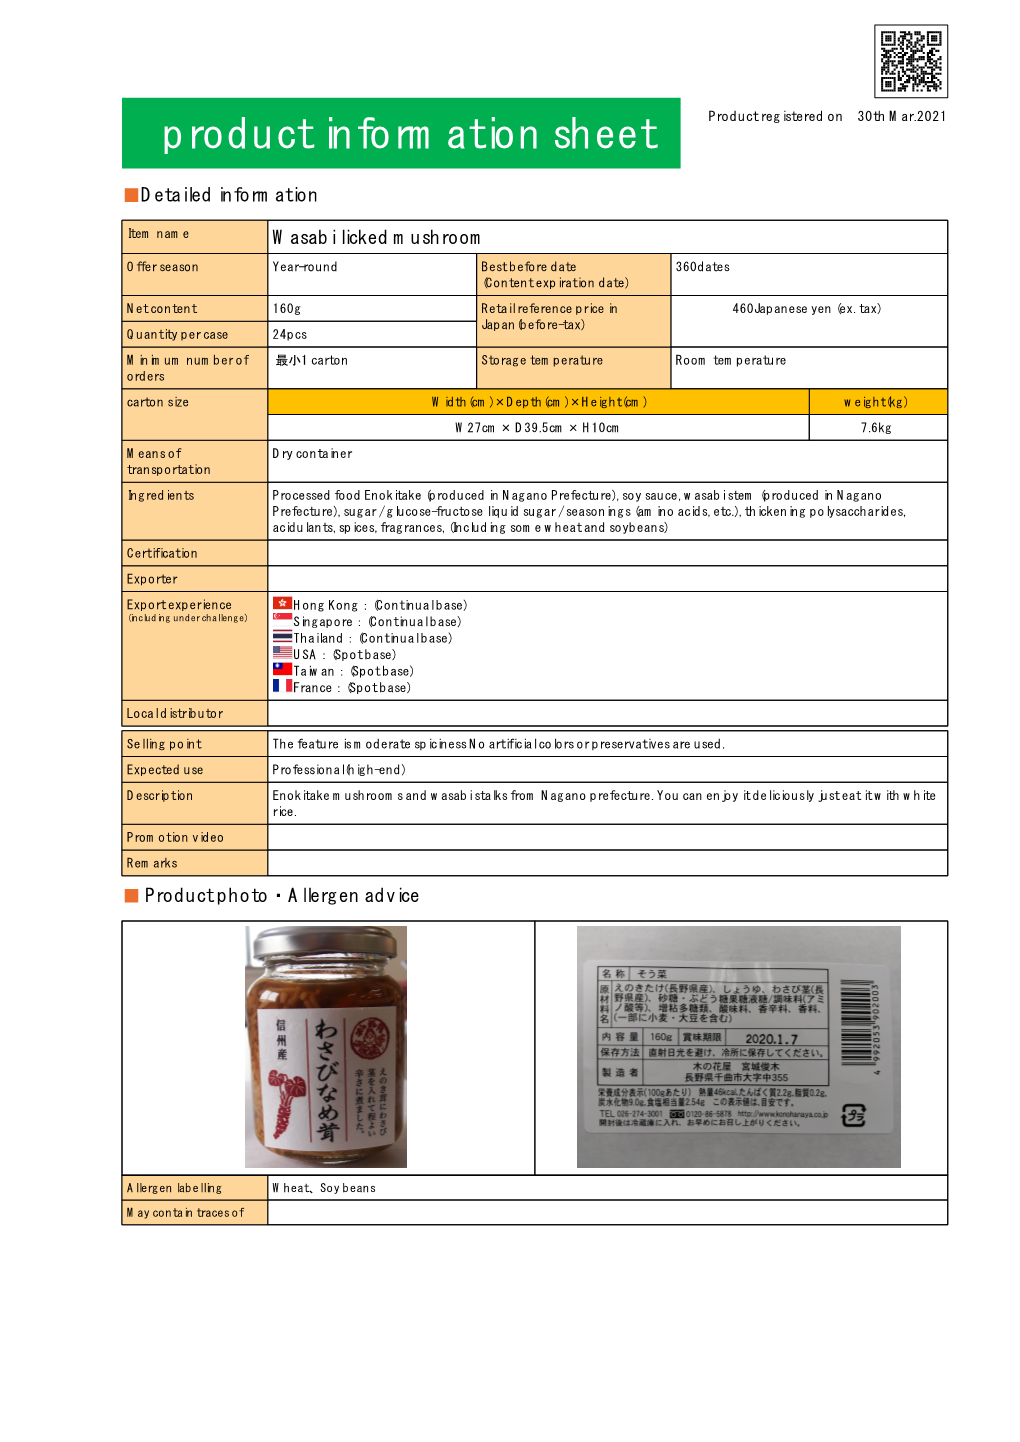 Detailed Information Wasabi Licked Mushroom Product Photo・Allergen